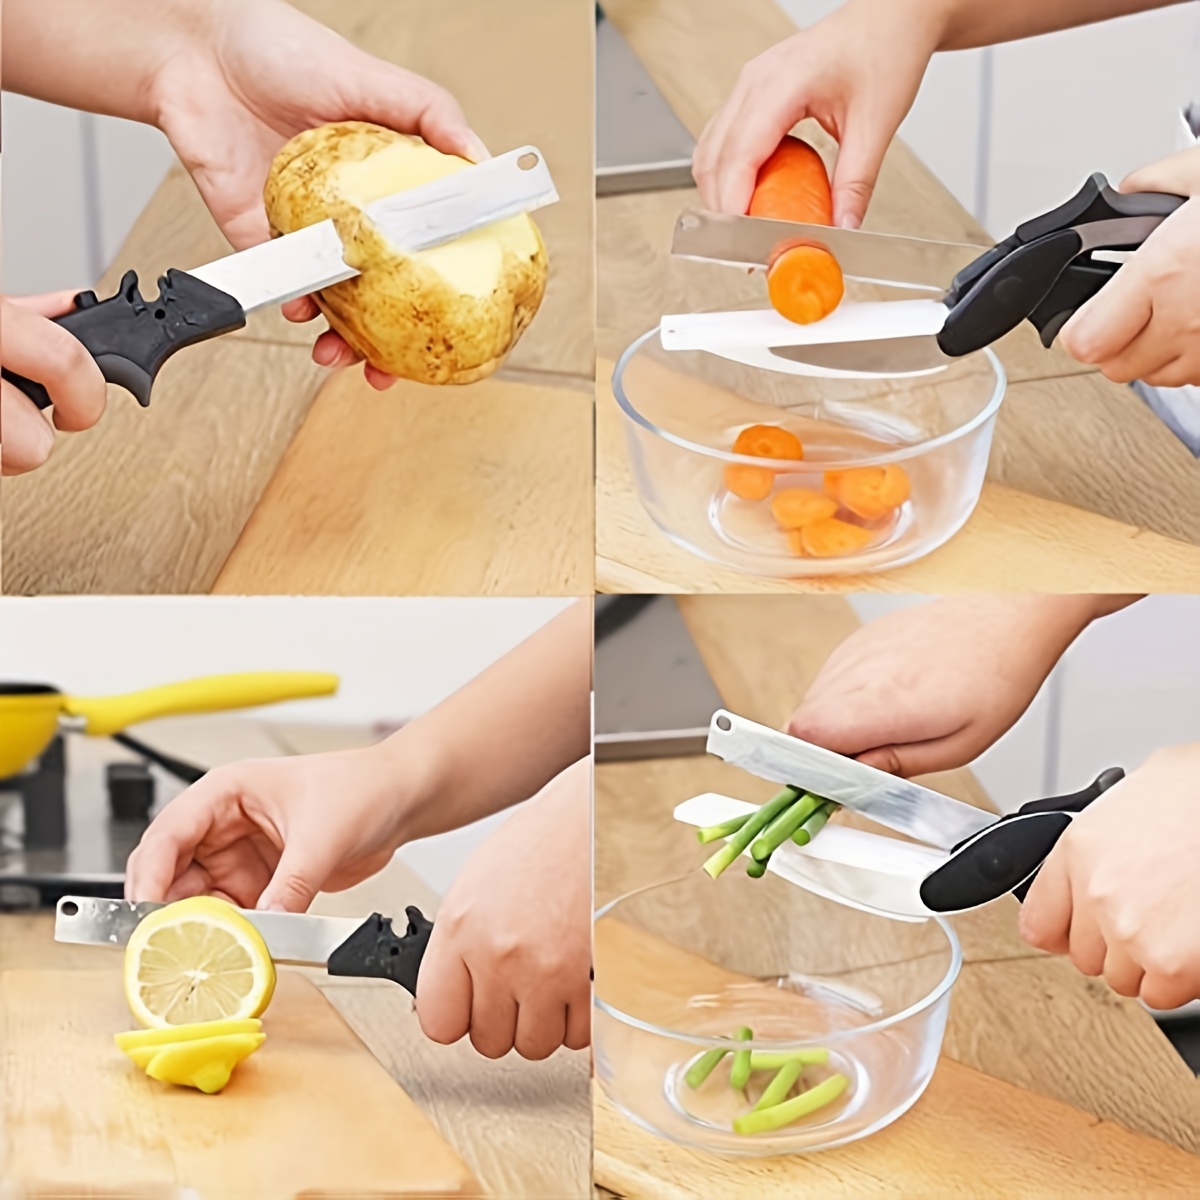 Smart Clever Cutter Kitchen Knife - 1